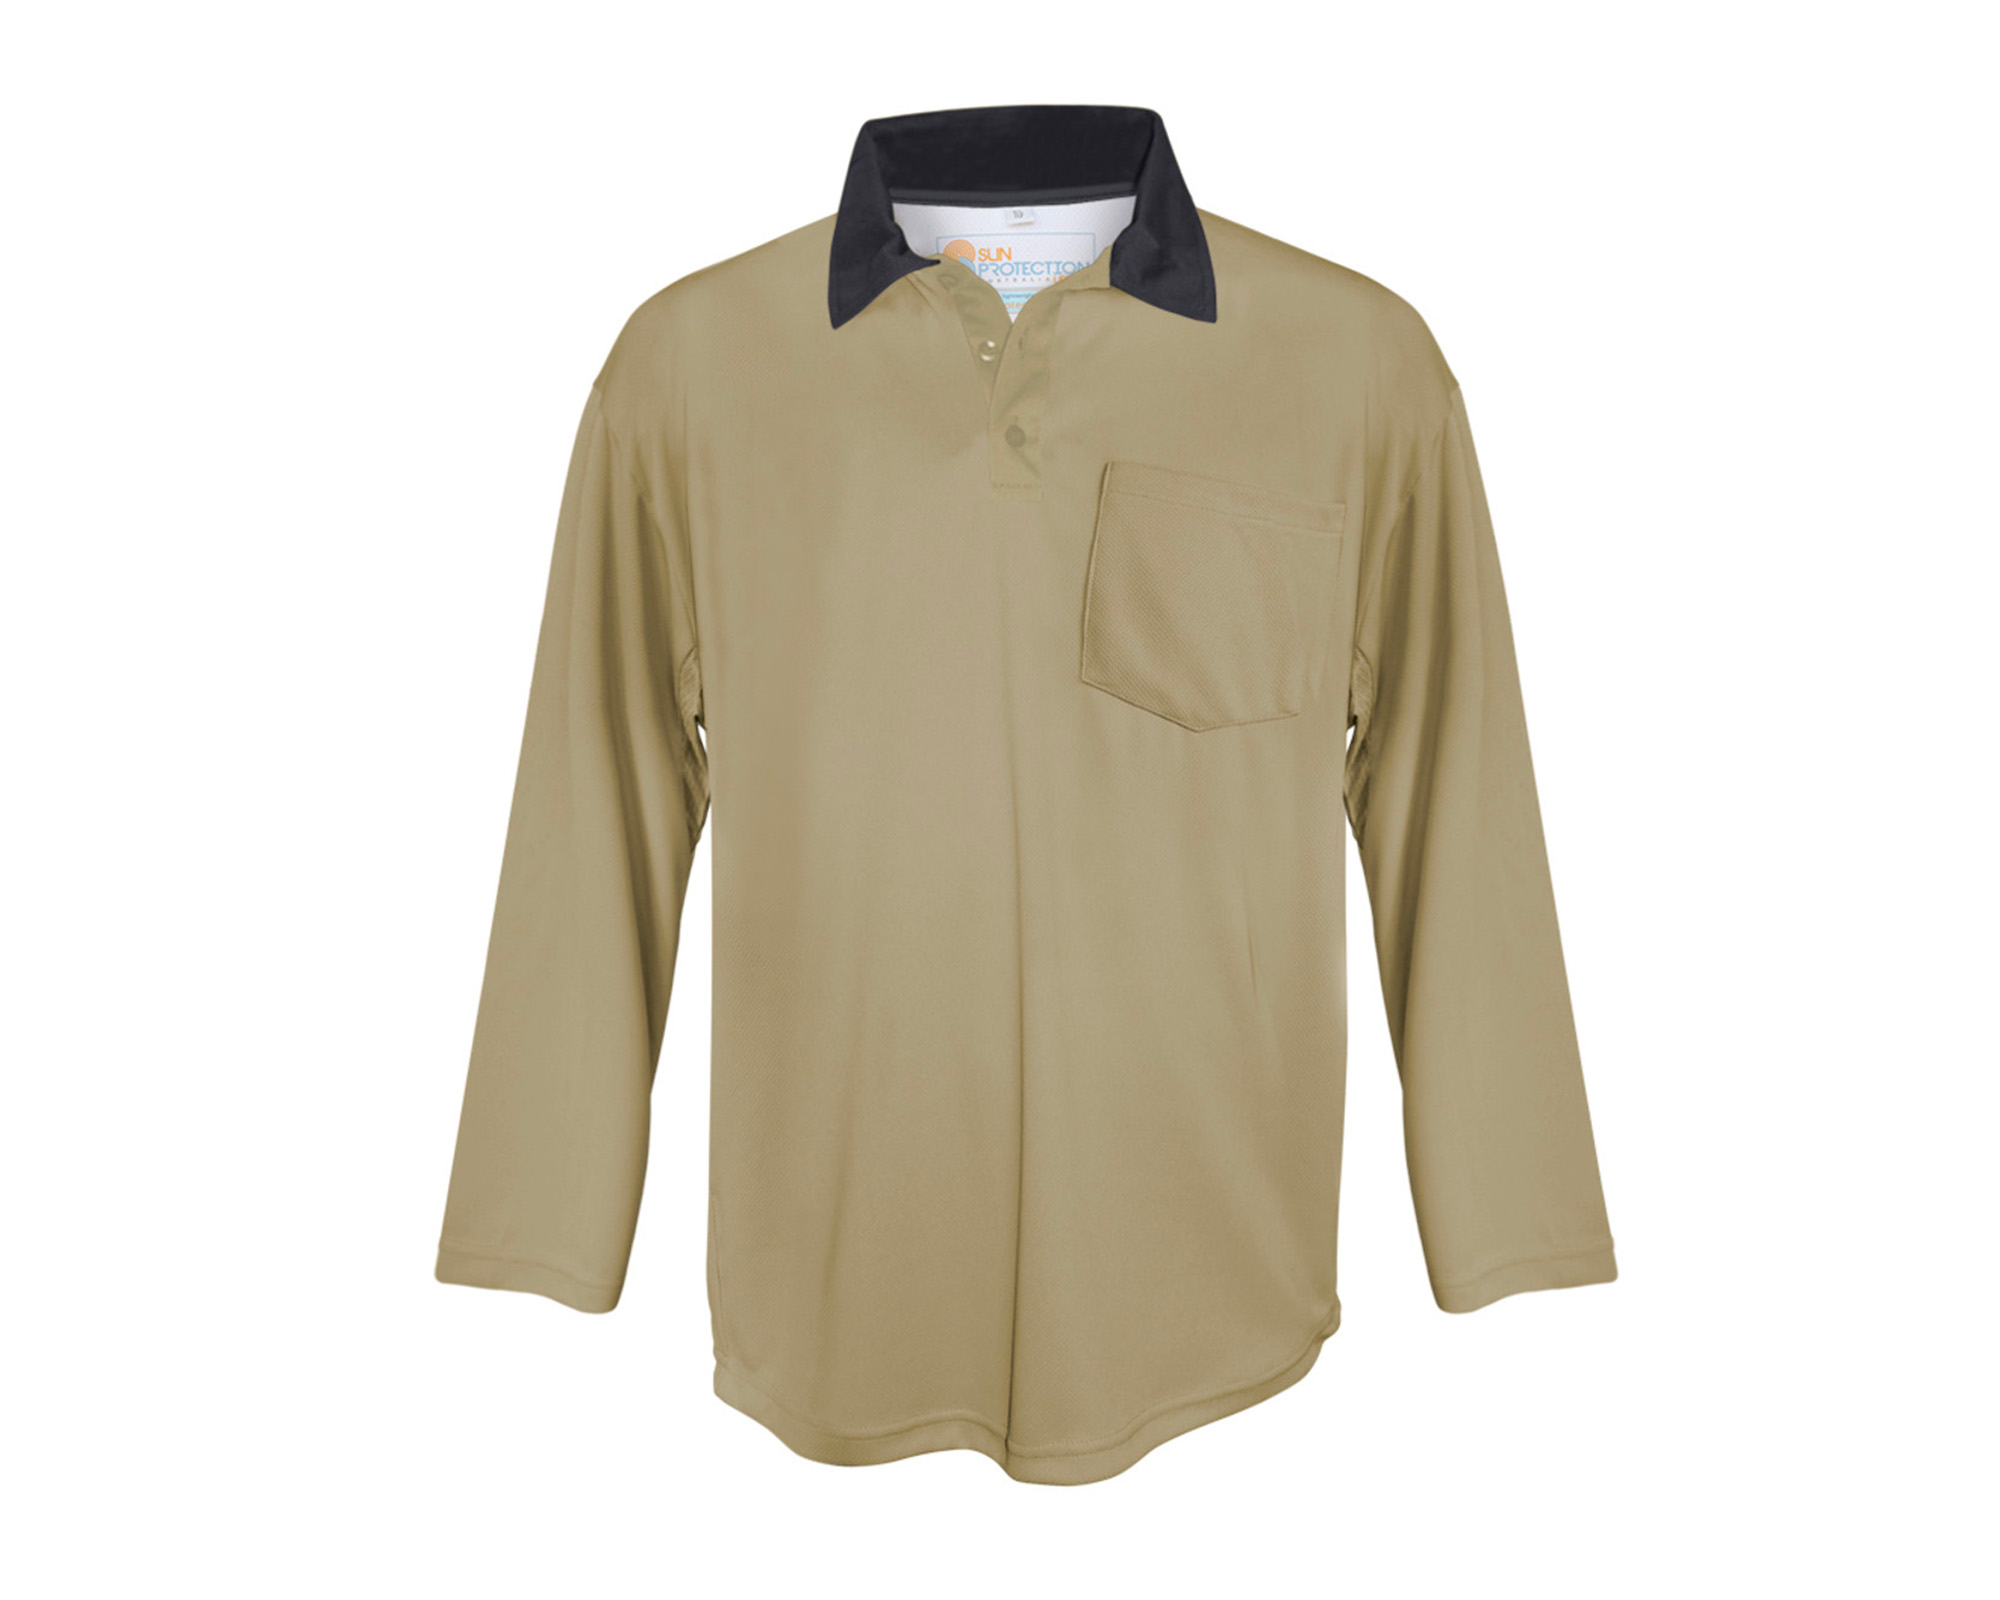 Tradie Polo Shirt in Sage - Sun Protection Australia